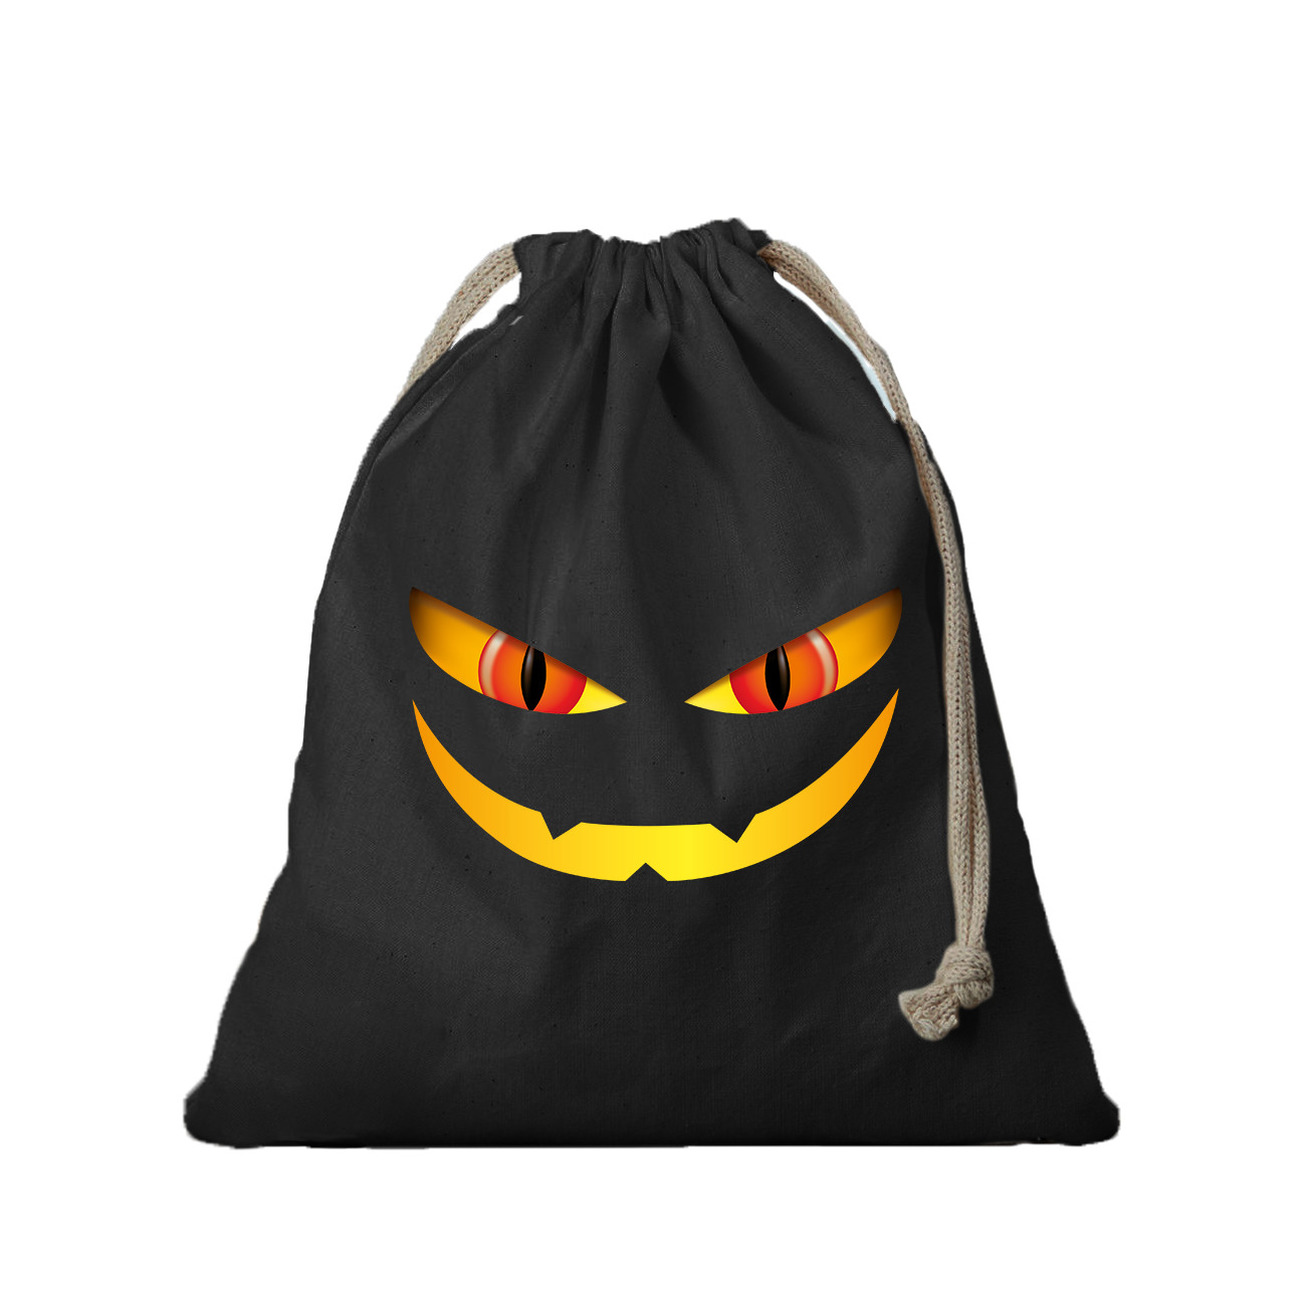 2x Katoenen Halloween snoep tasje monster gezicht zwart 25 x 30 cm